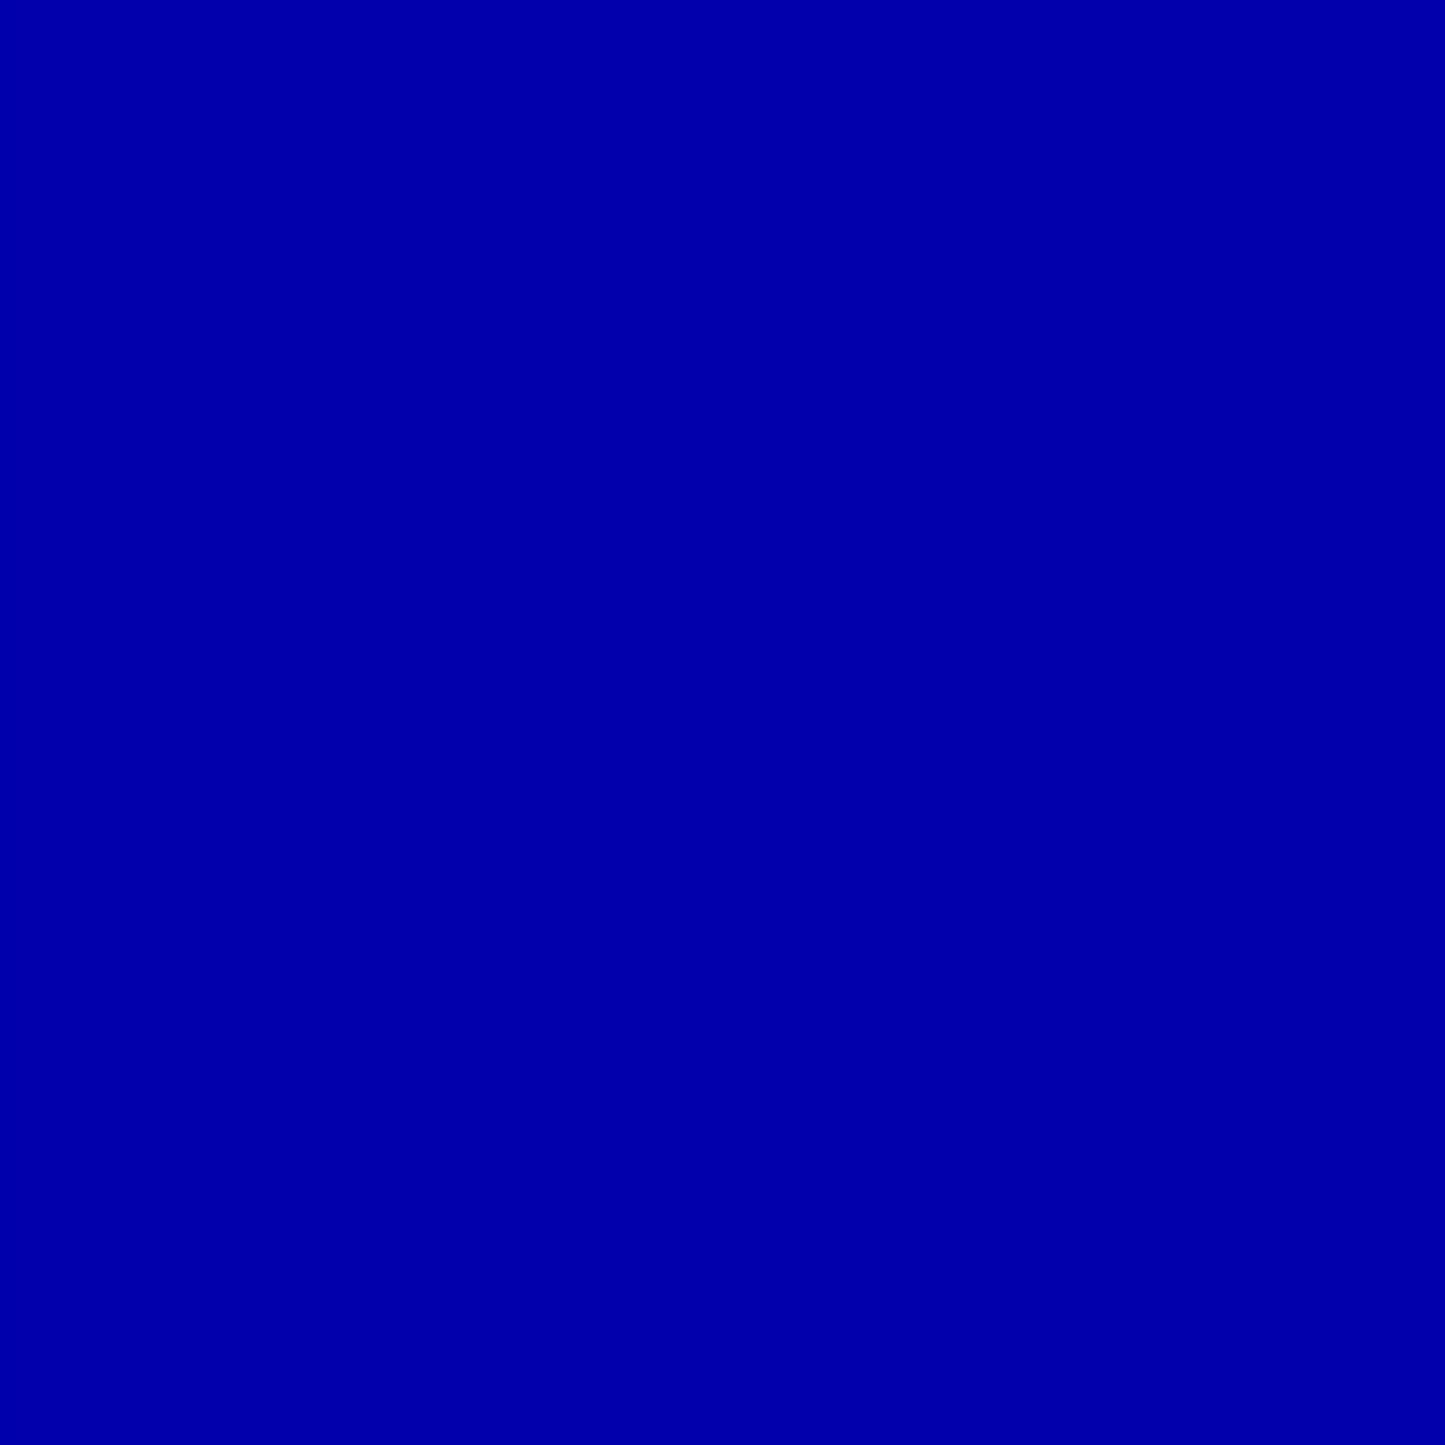 Incudo Navy Blue Opaque Acrylic Sheet - 300x200x3mm (11.8x7.87x0.12")